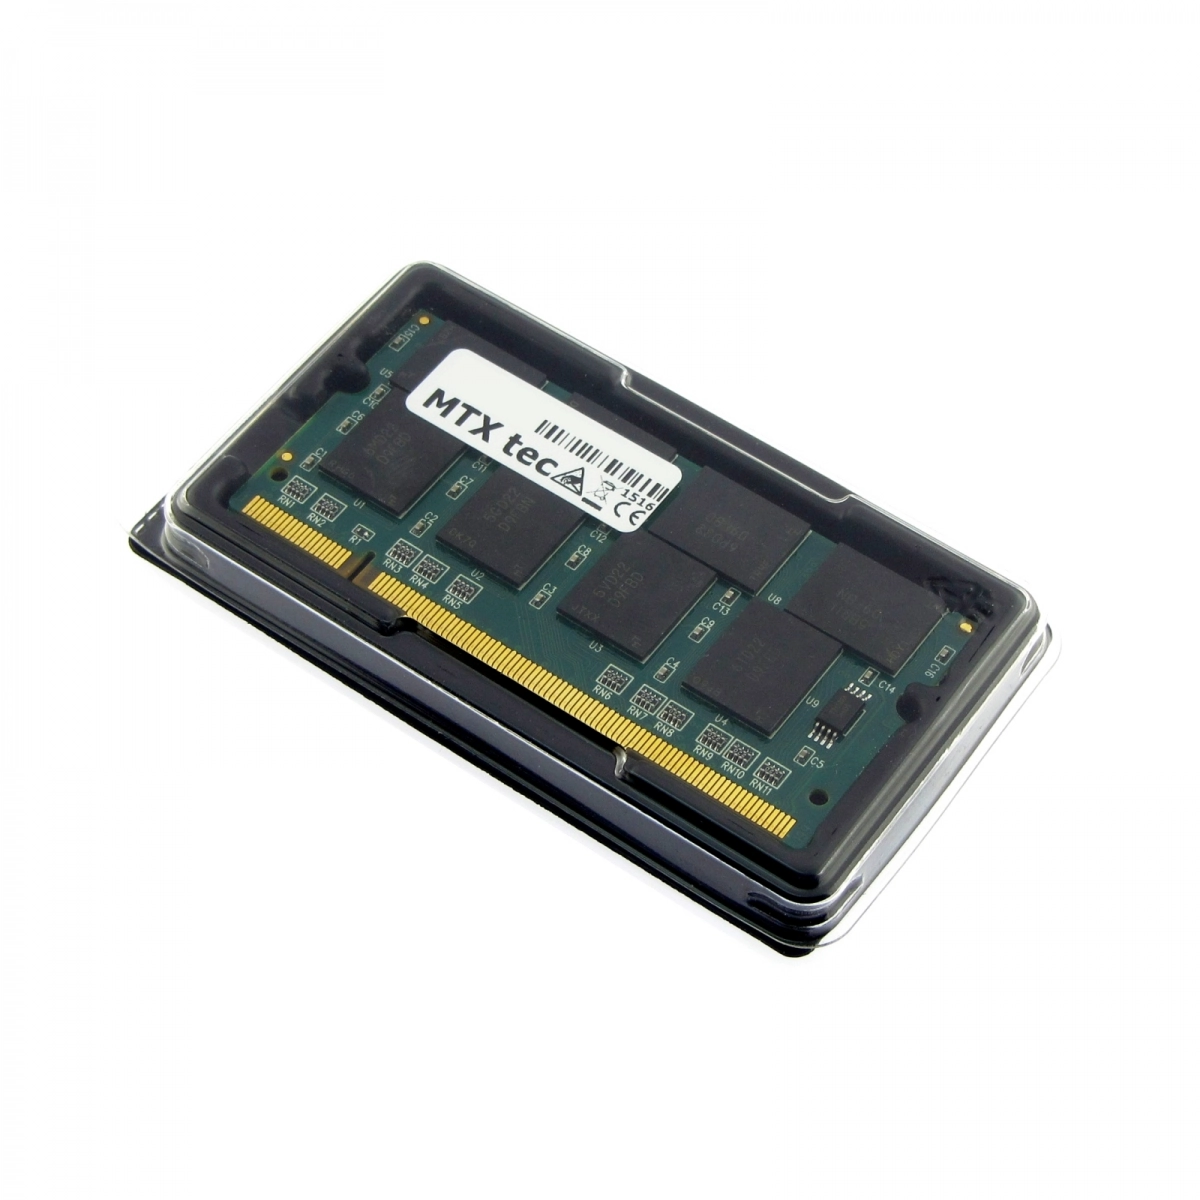 MTXtec 1GB, 1024MB Notebook RAM-Speicher SODIMM DDR1 PC2700, 333MHz 200 pin